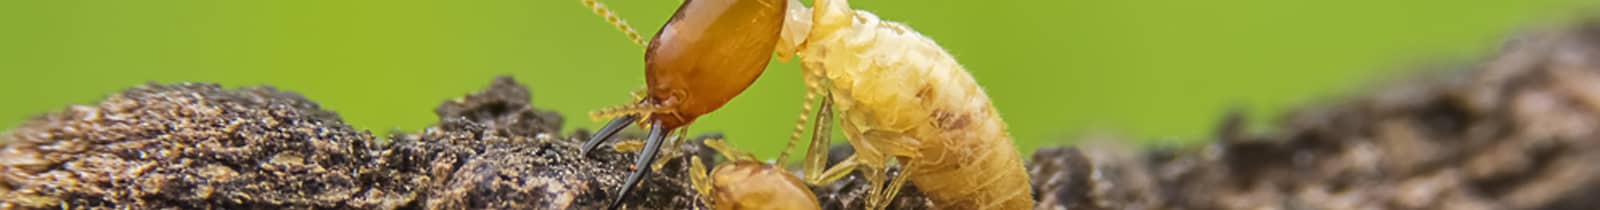 Termite exterminator pest control Boise, Idaho